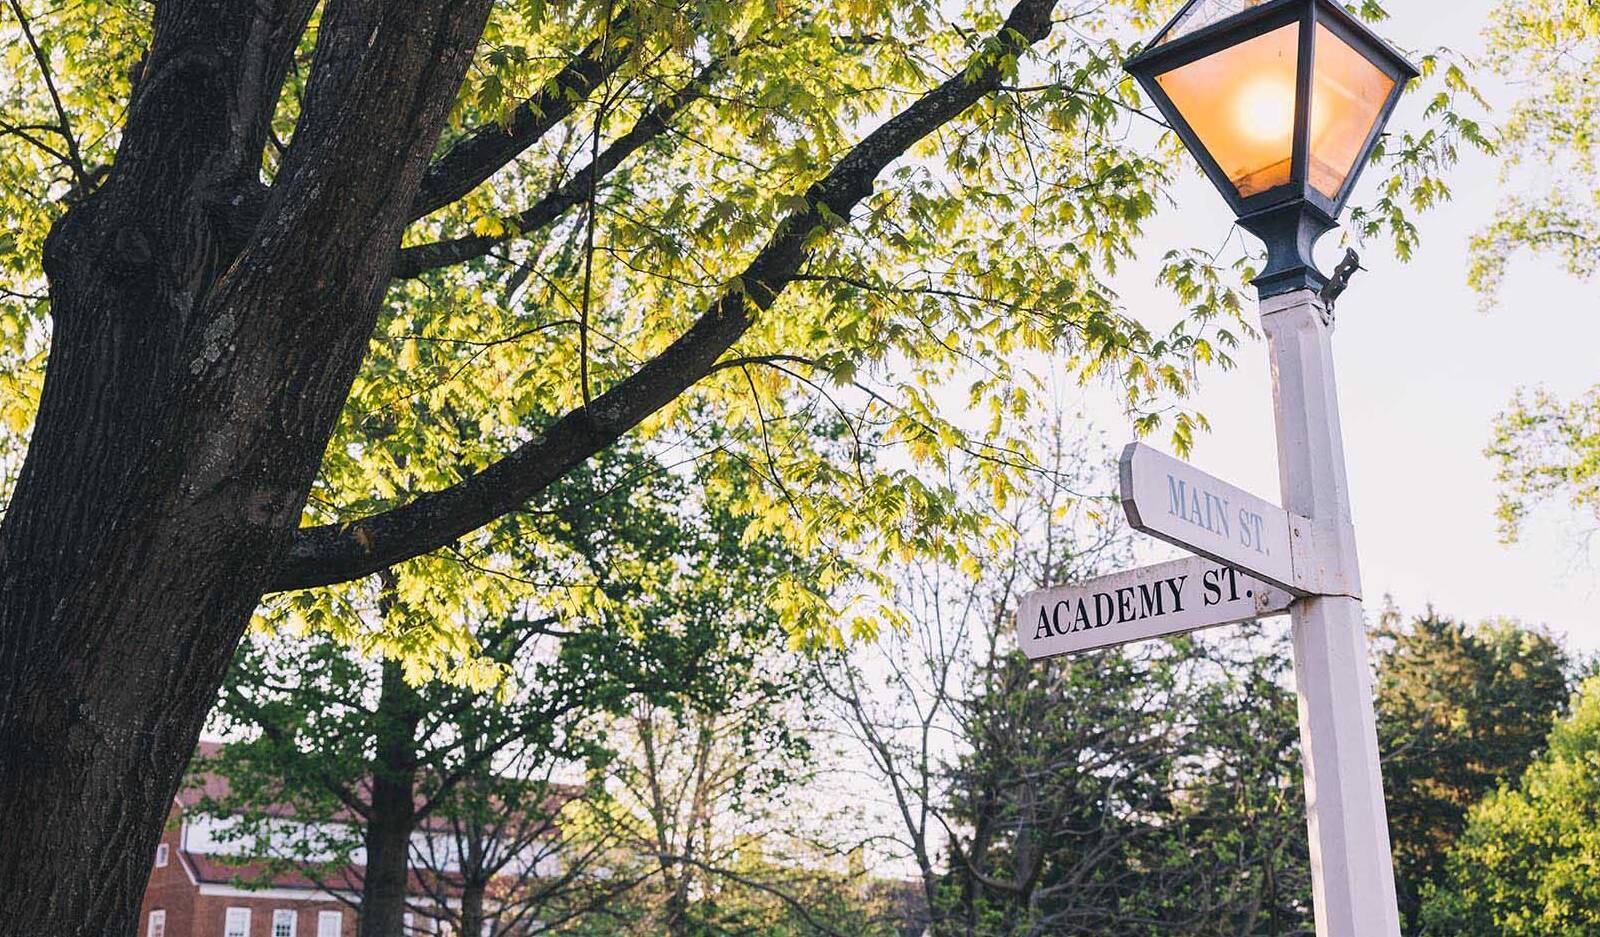 Main Street and Academy Street cross signs